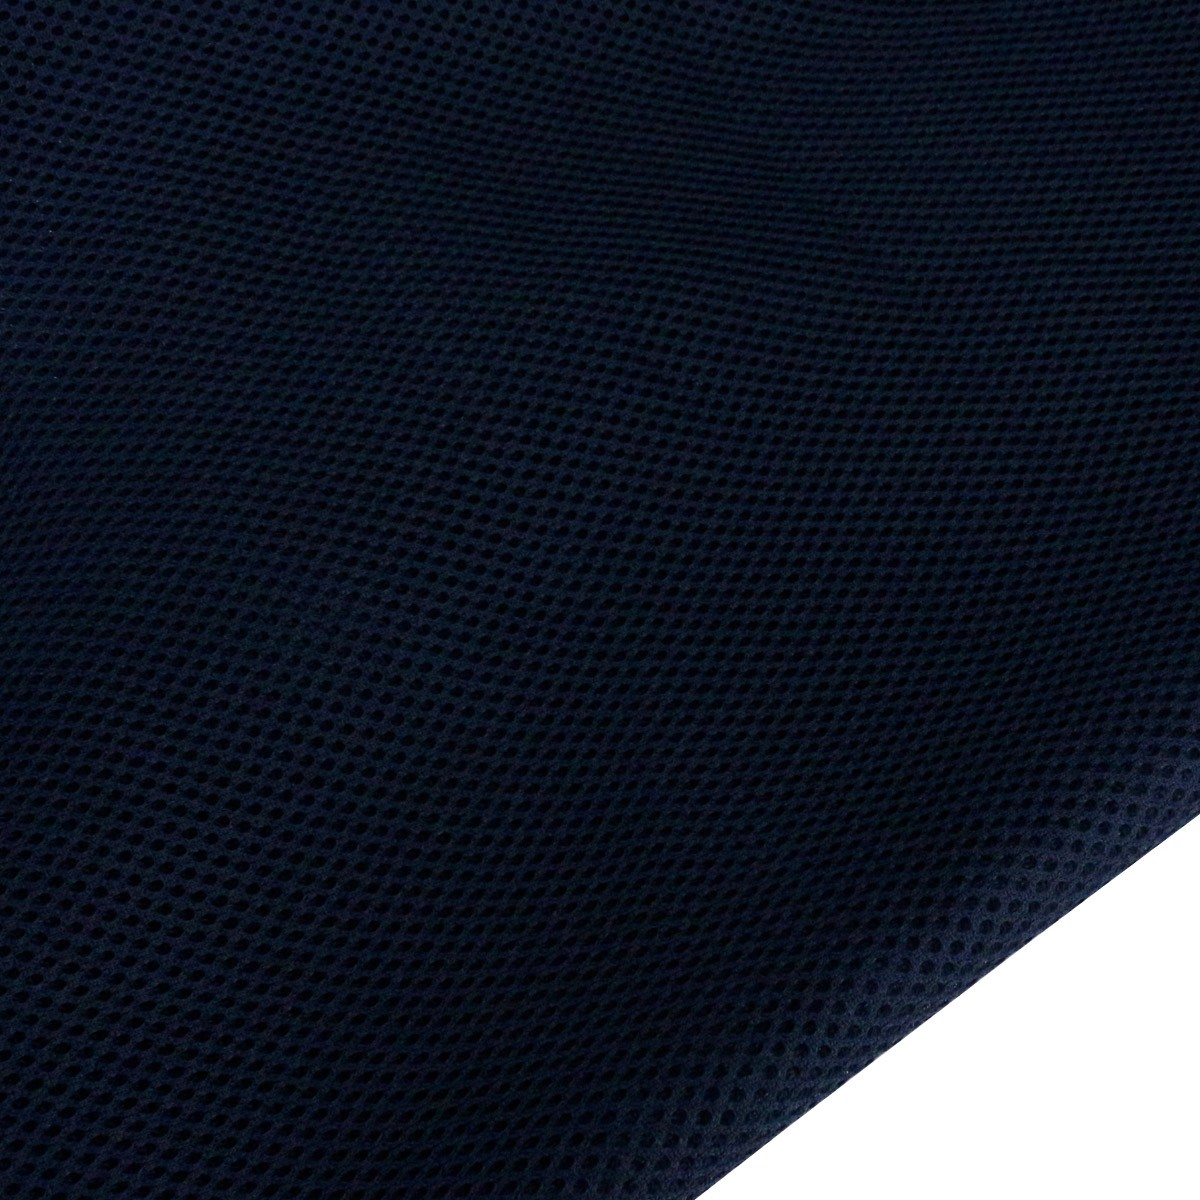 Acoustic Wall Fabric Foam 150x100cm Navy Blue